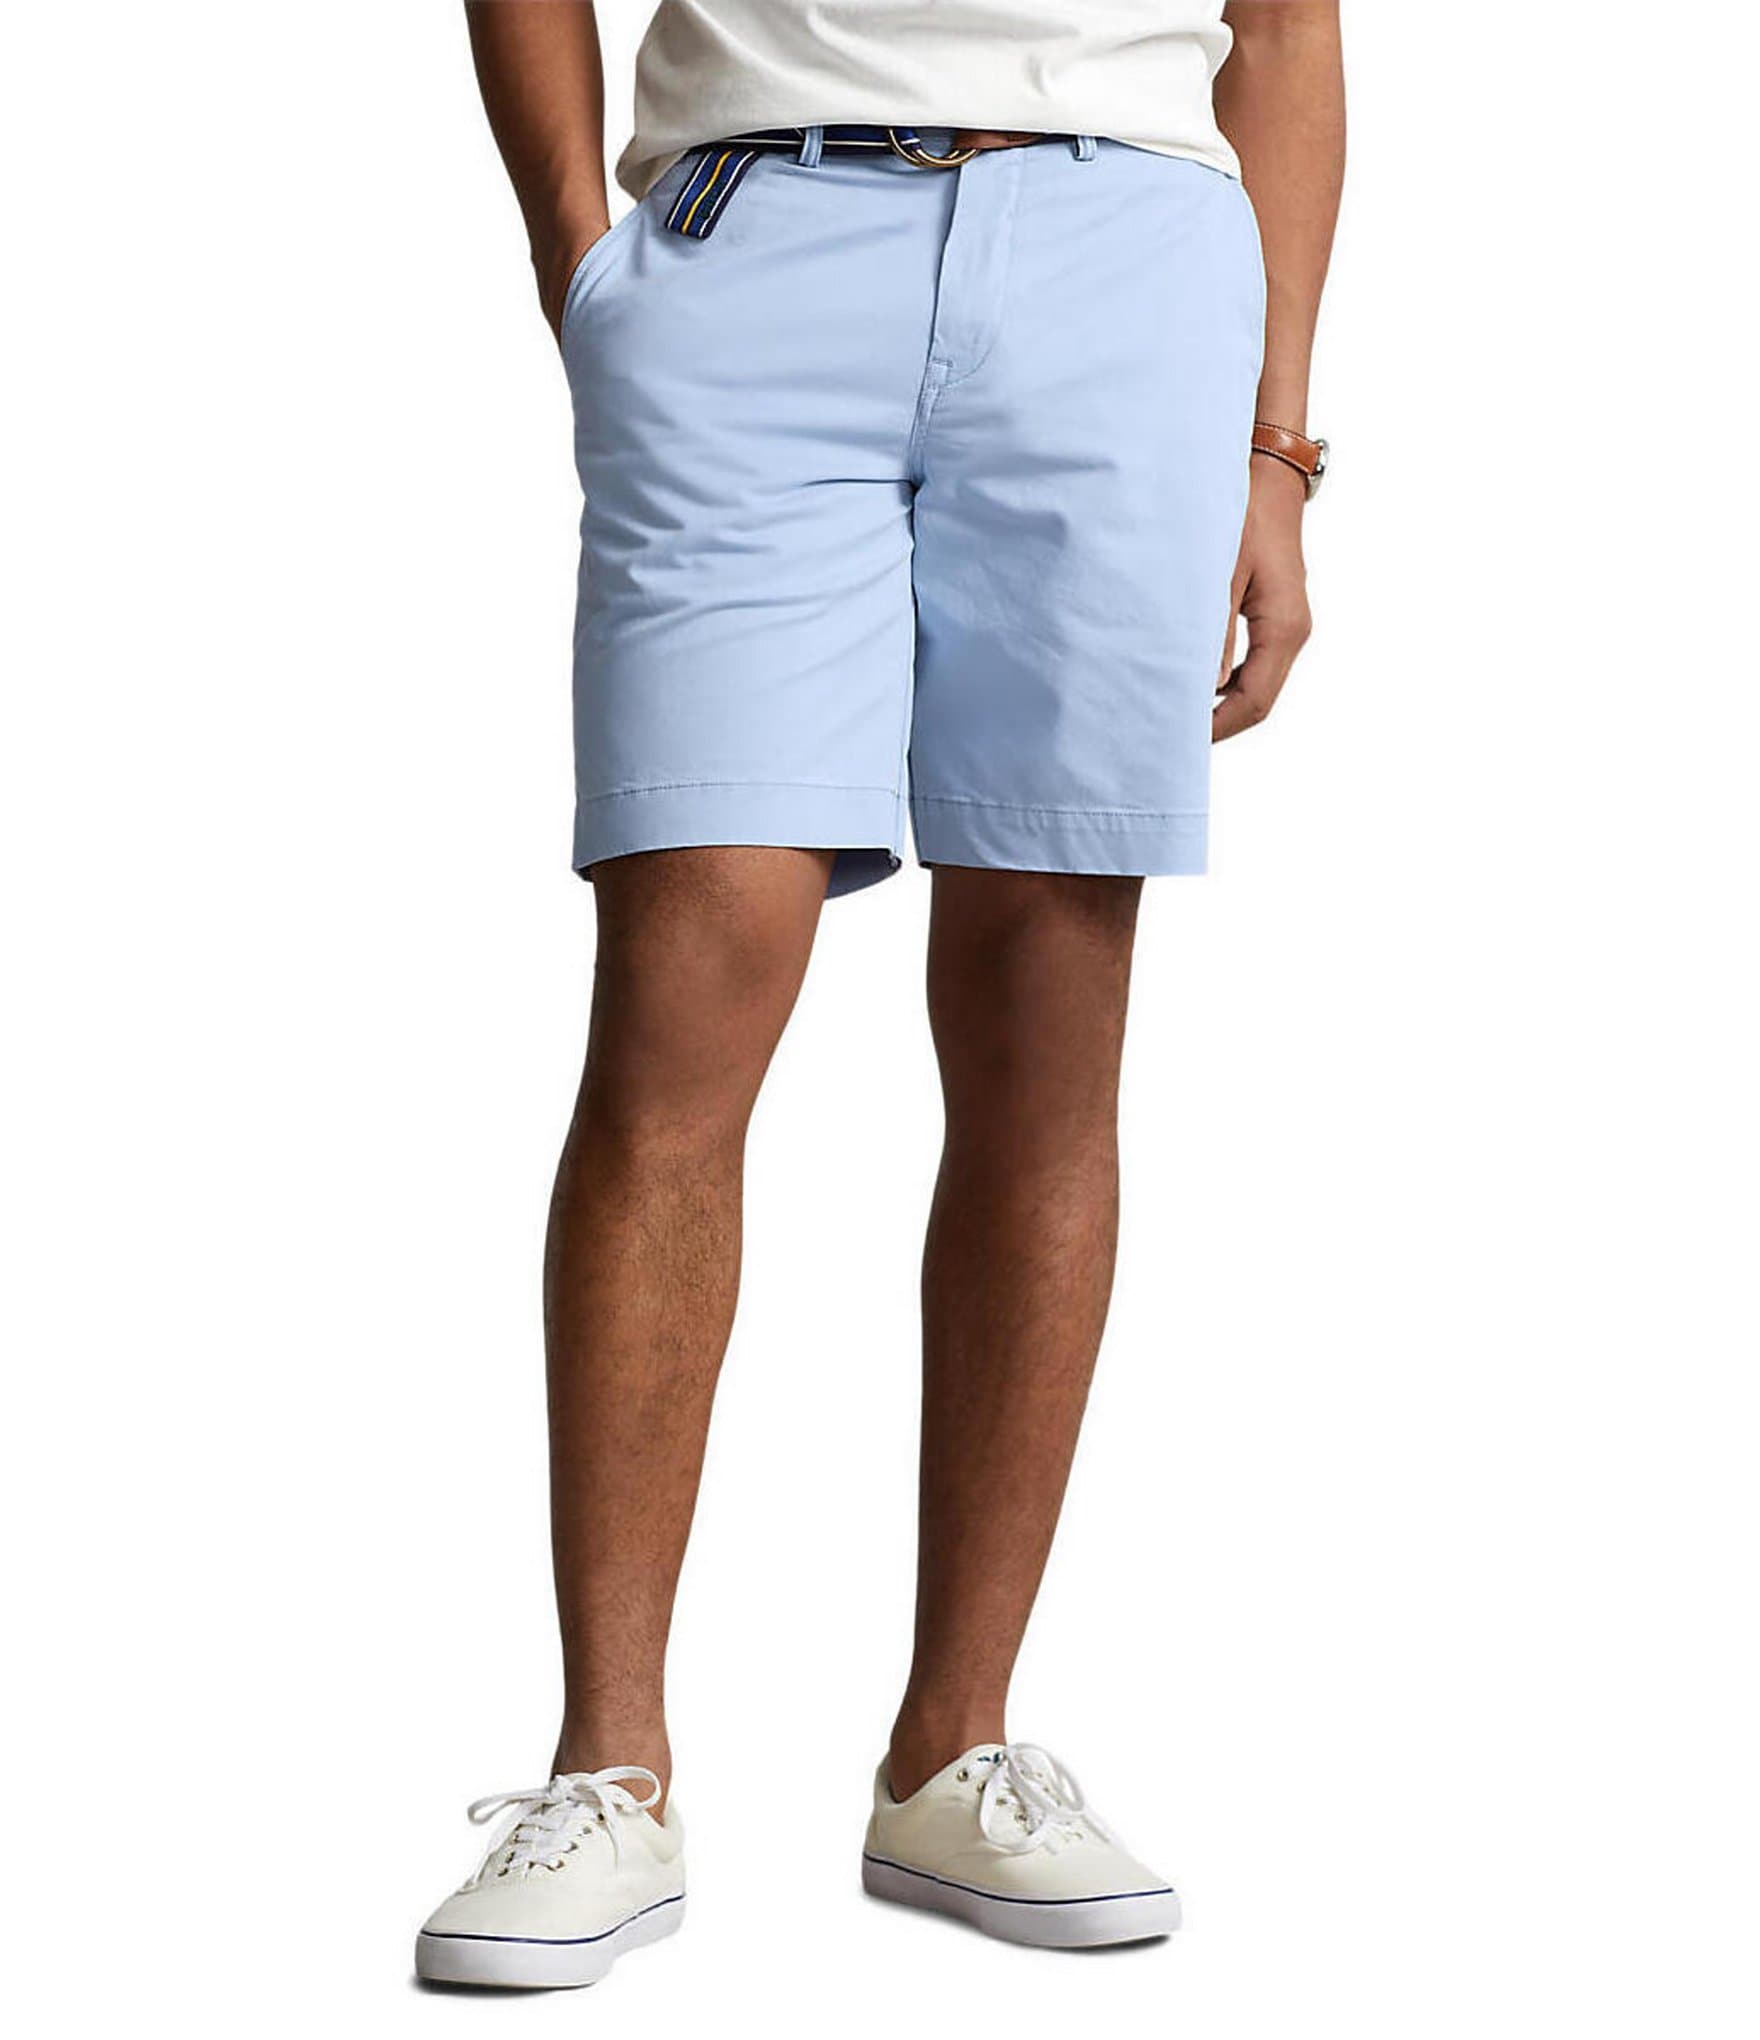 Polo Ralph Lauren 20.3 cm Stretch Straight Fit Chino Men's Shorts - Carmel Pink